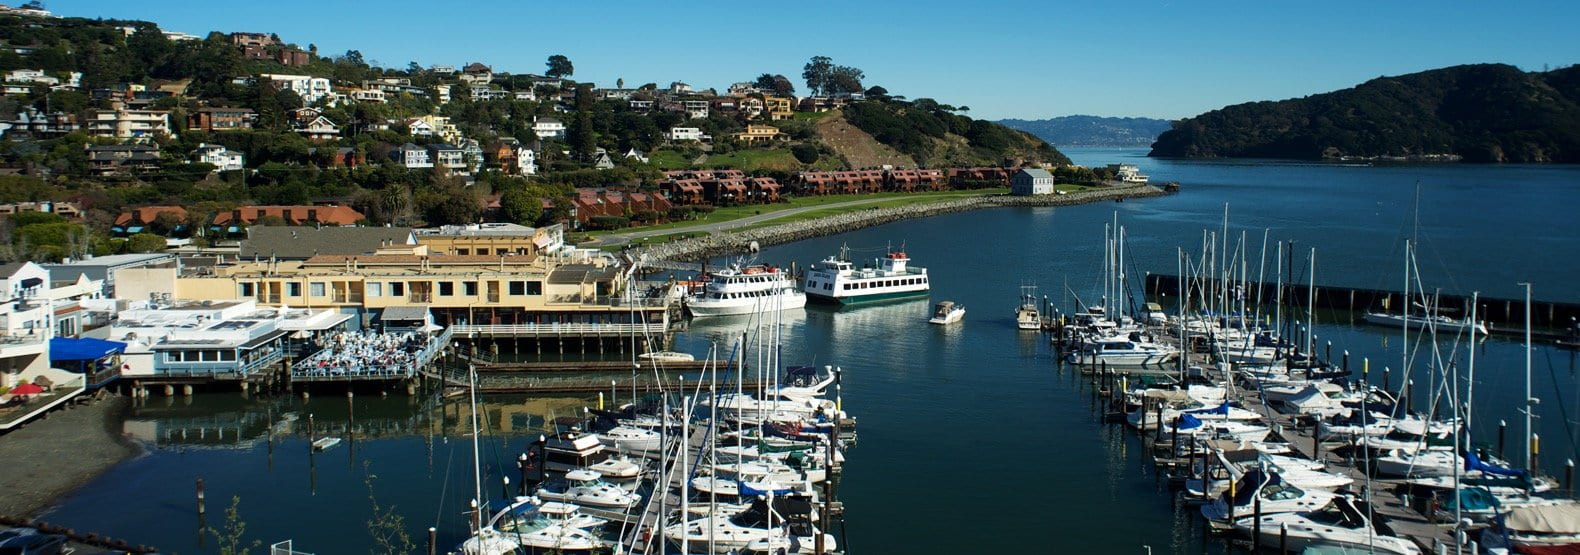 Tiburon ferry landing on San Francisco Bay.